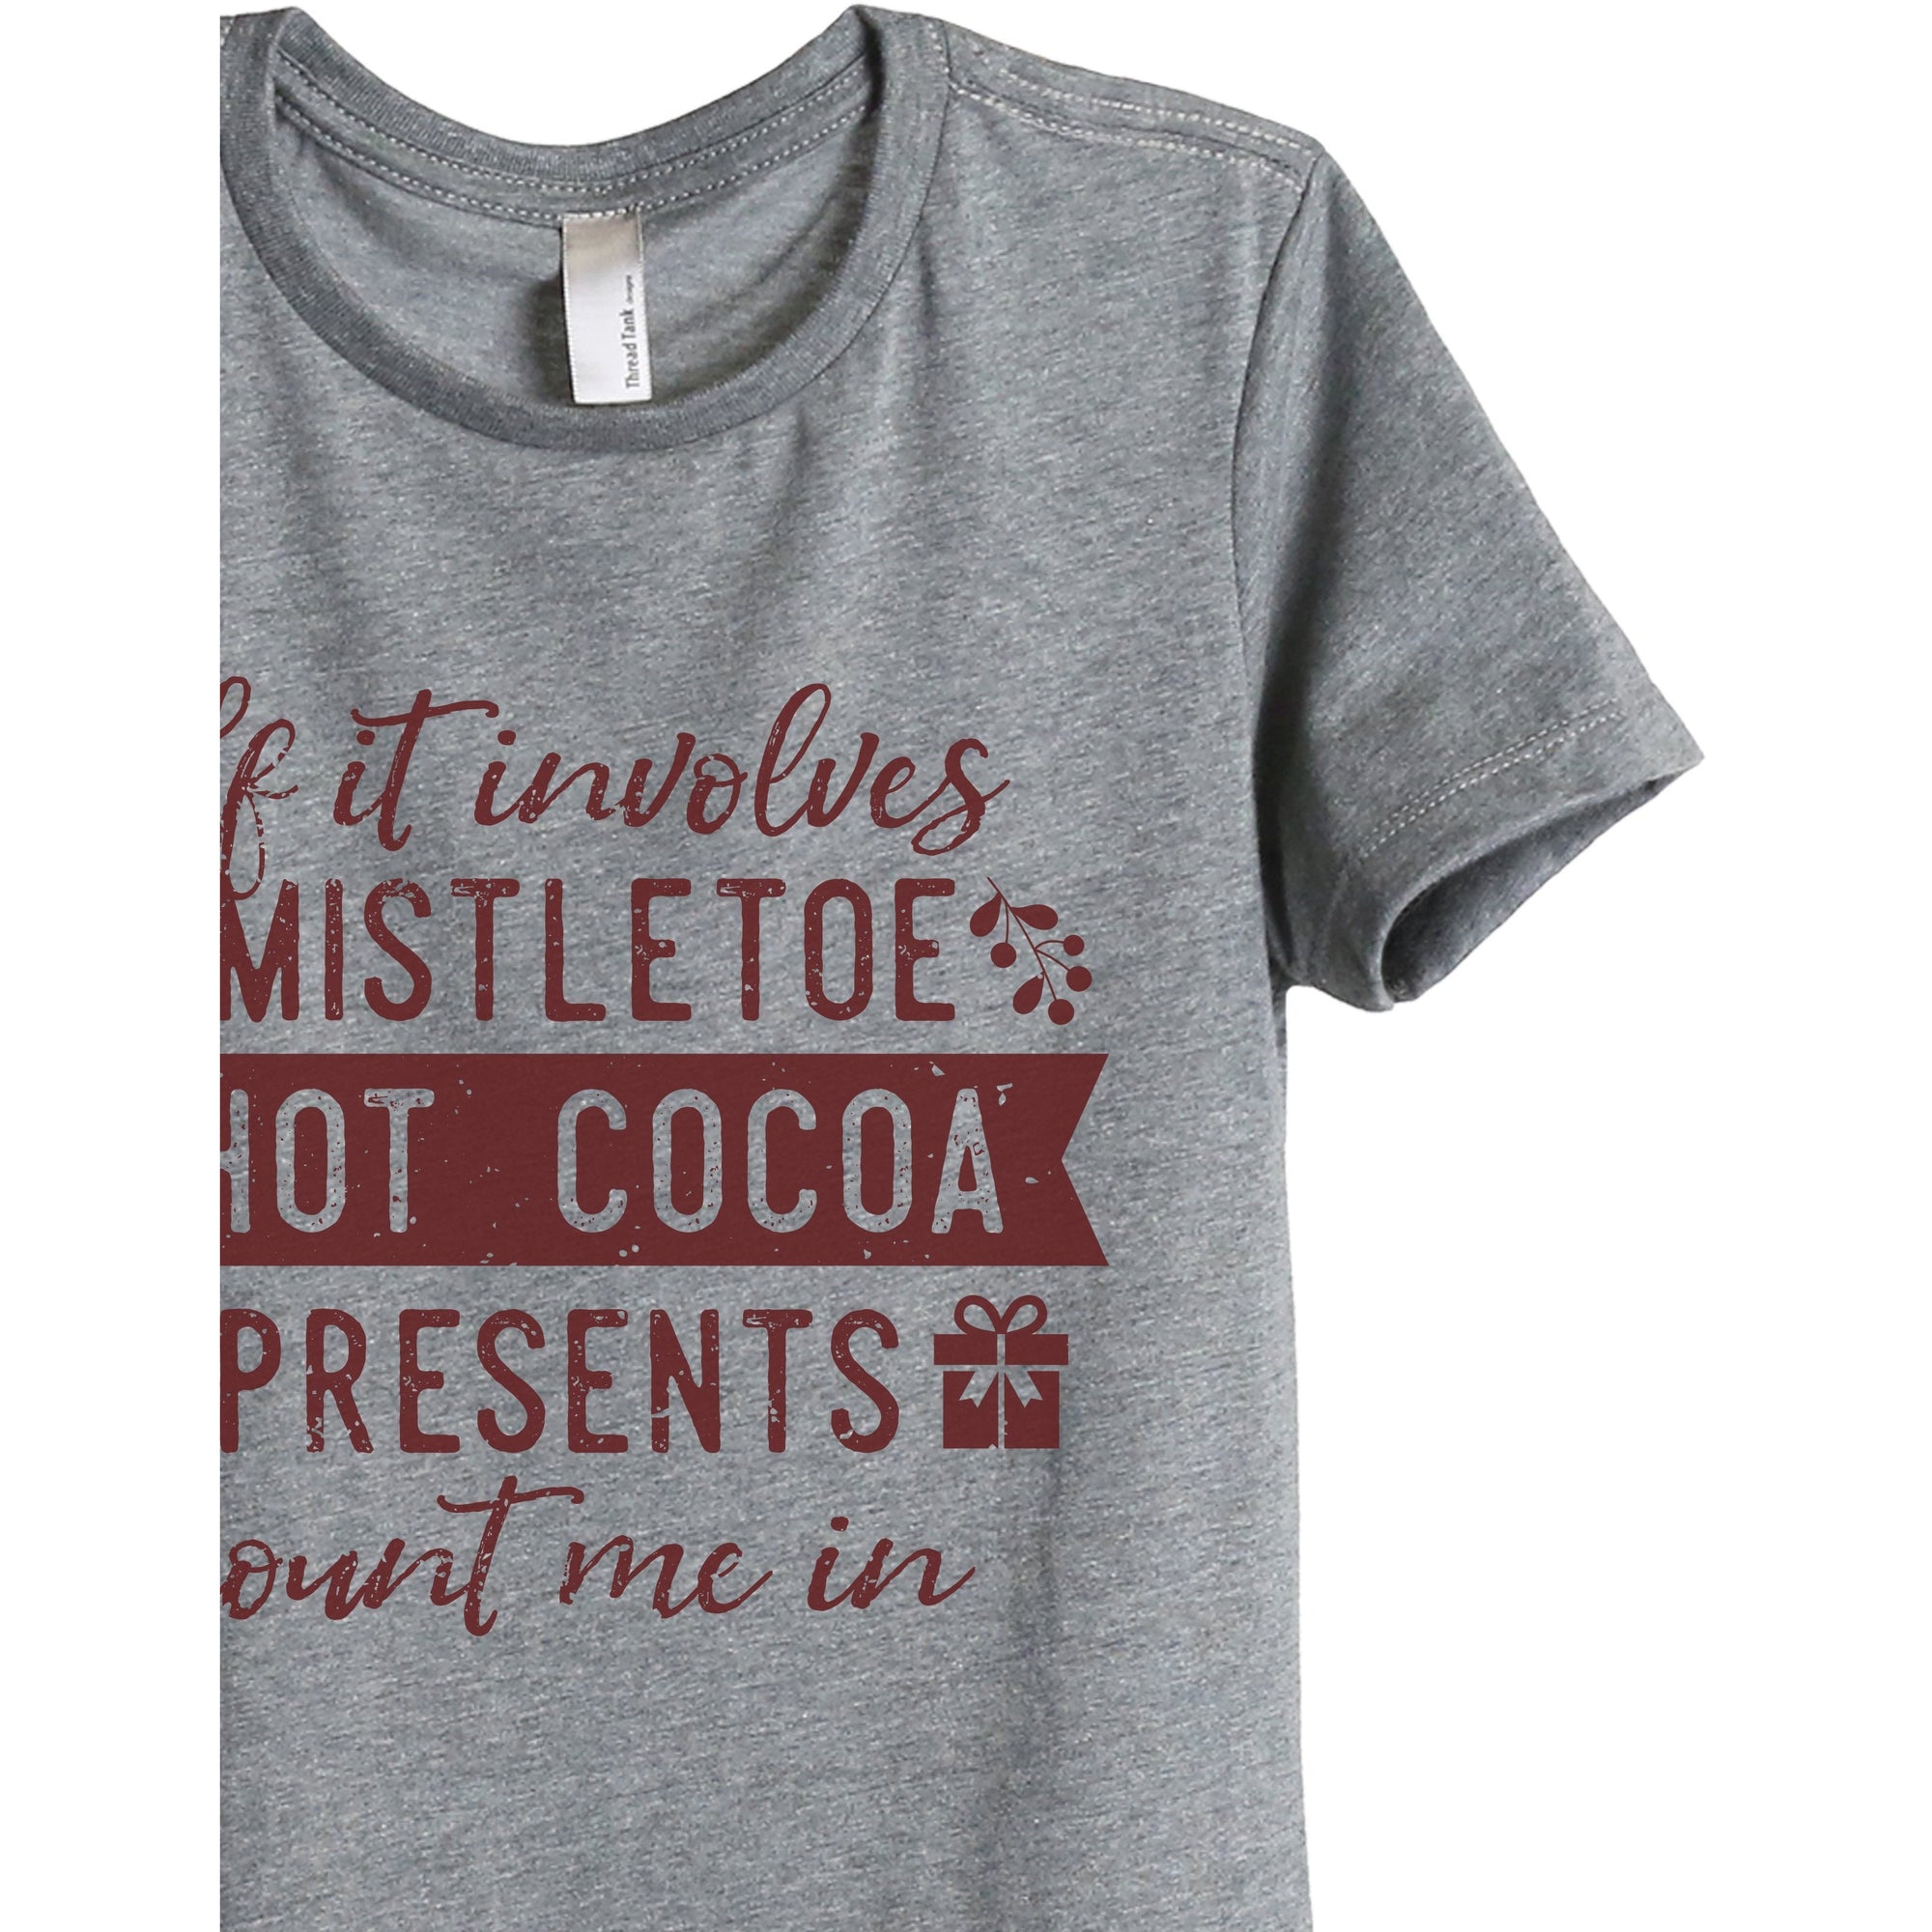 Mistletoe Hot Cocoa And Presents